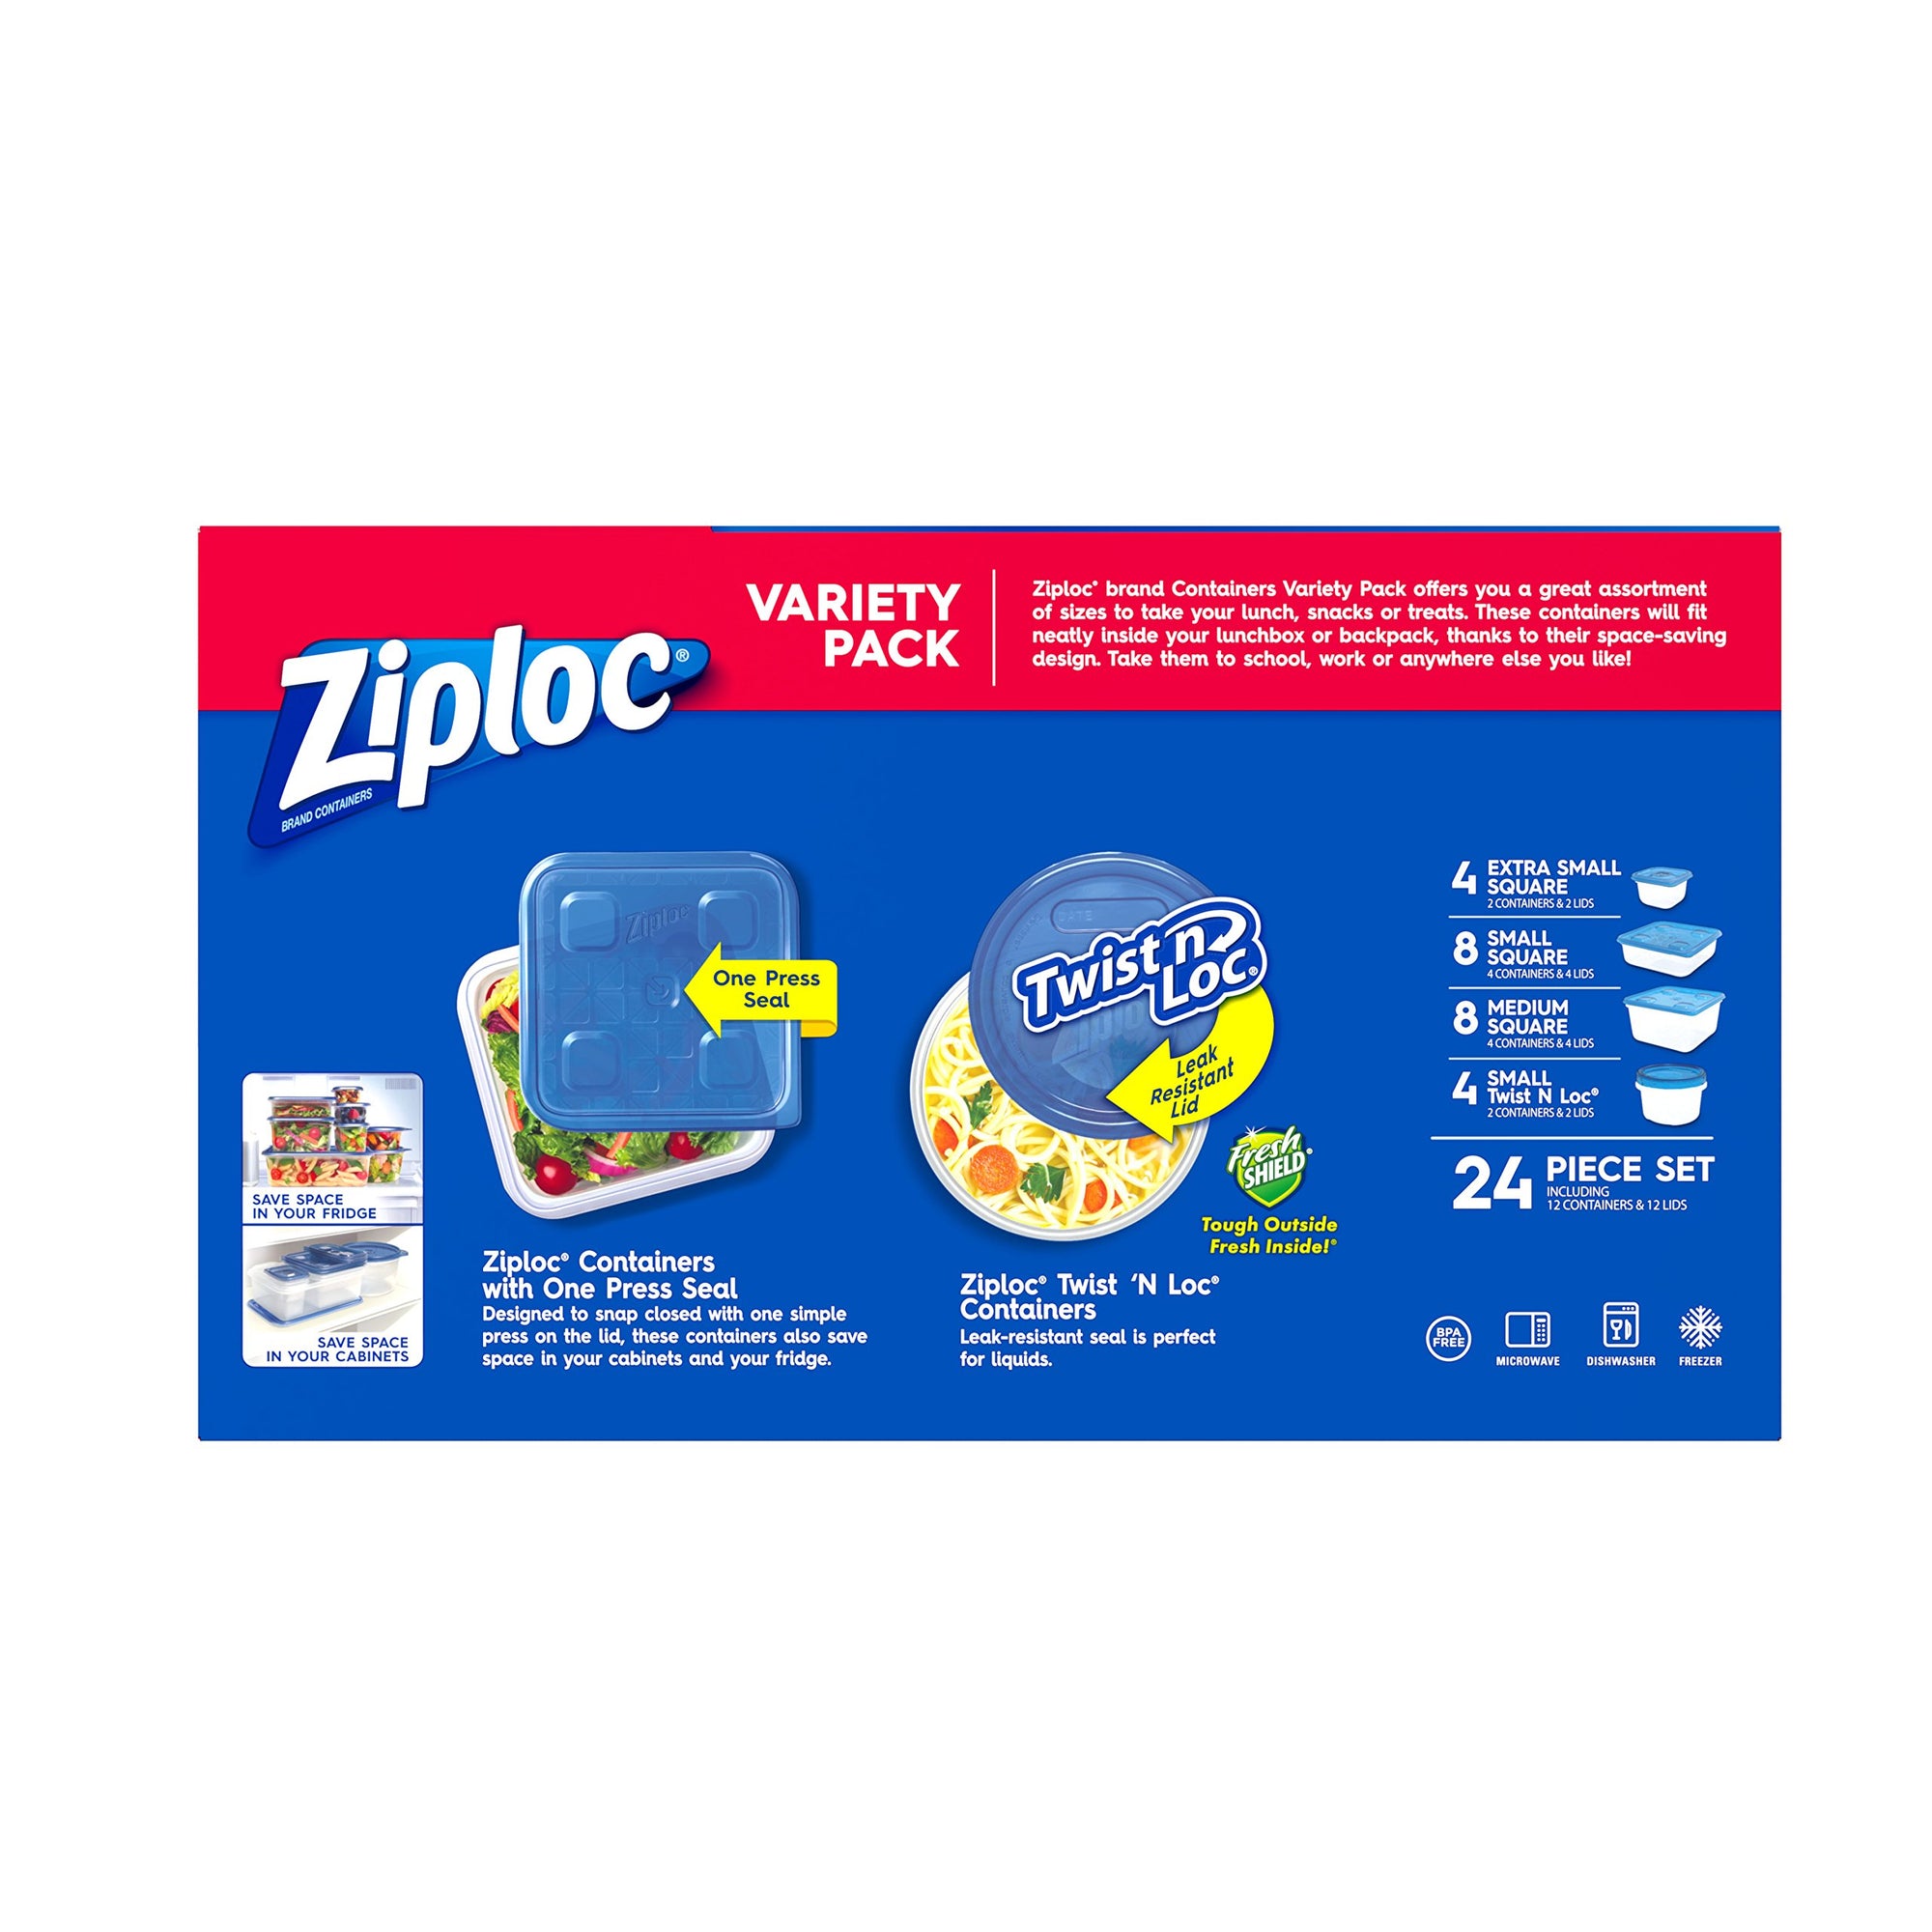 Ziploc Freezer Bag, 2 Gallon Jumbo, 10-CountPack of 3 